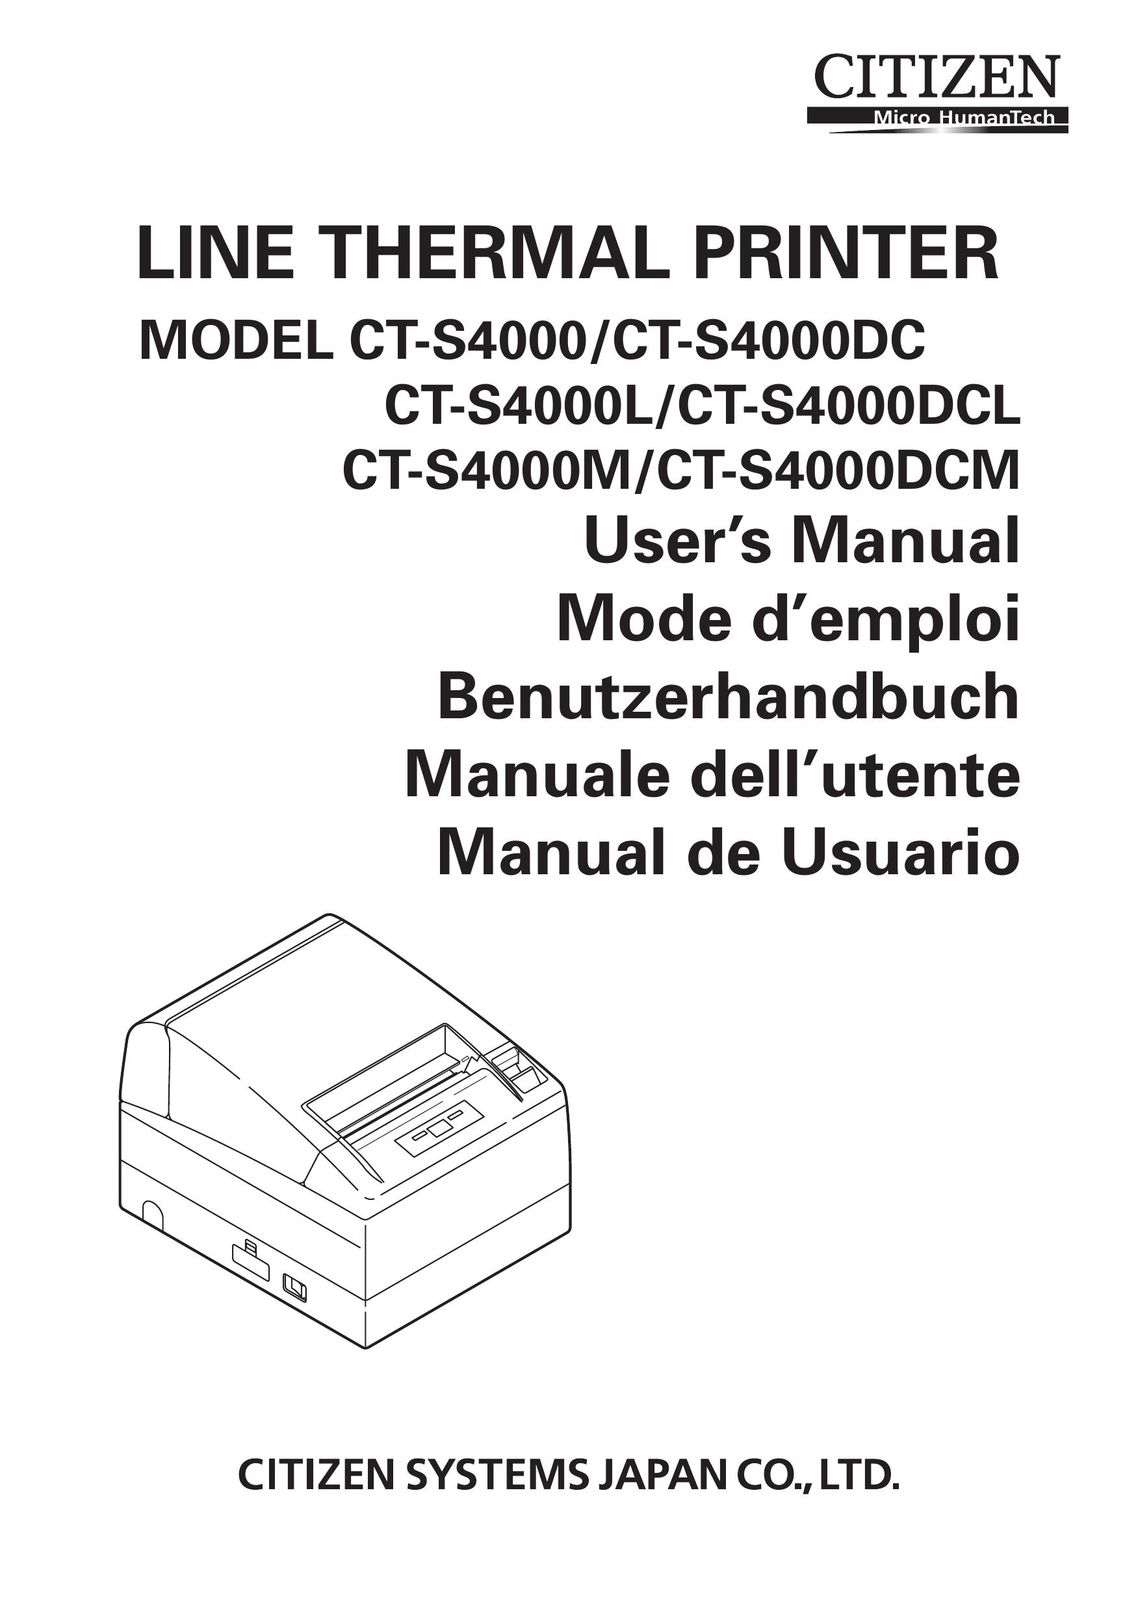 Citizen CT-S4000M Printer User Manual